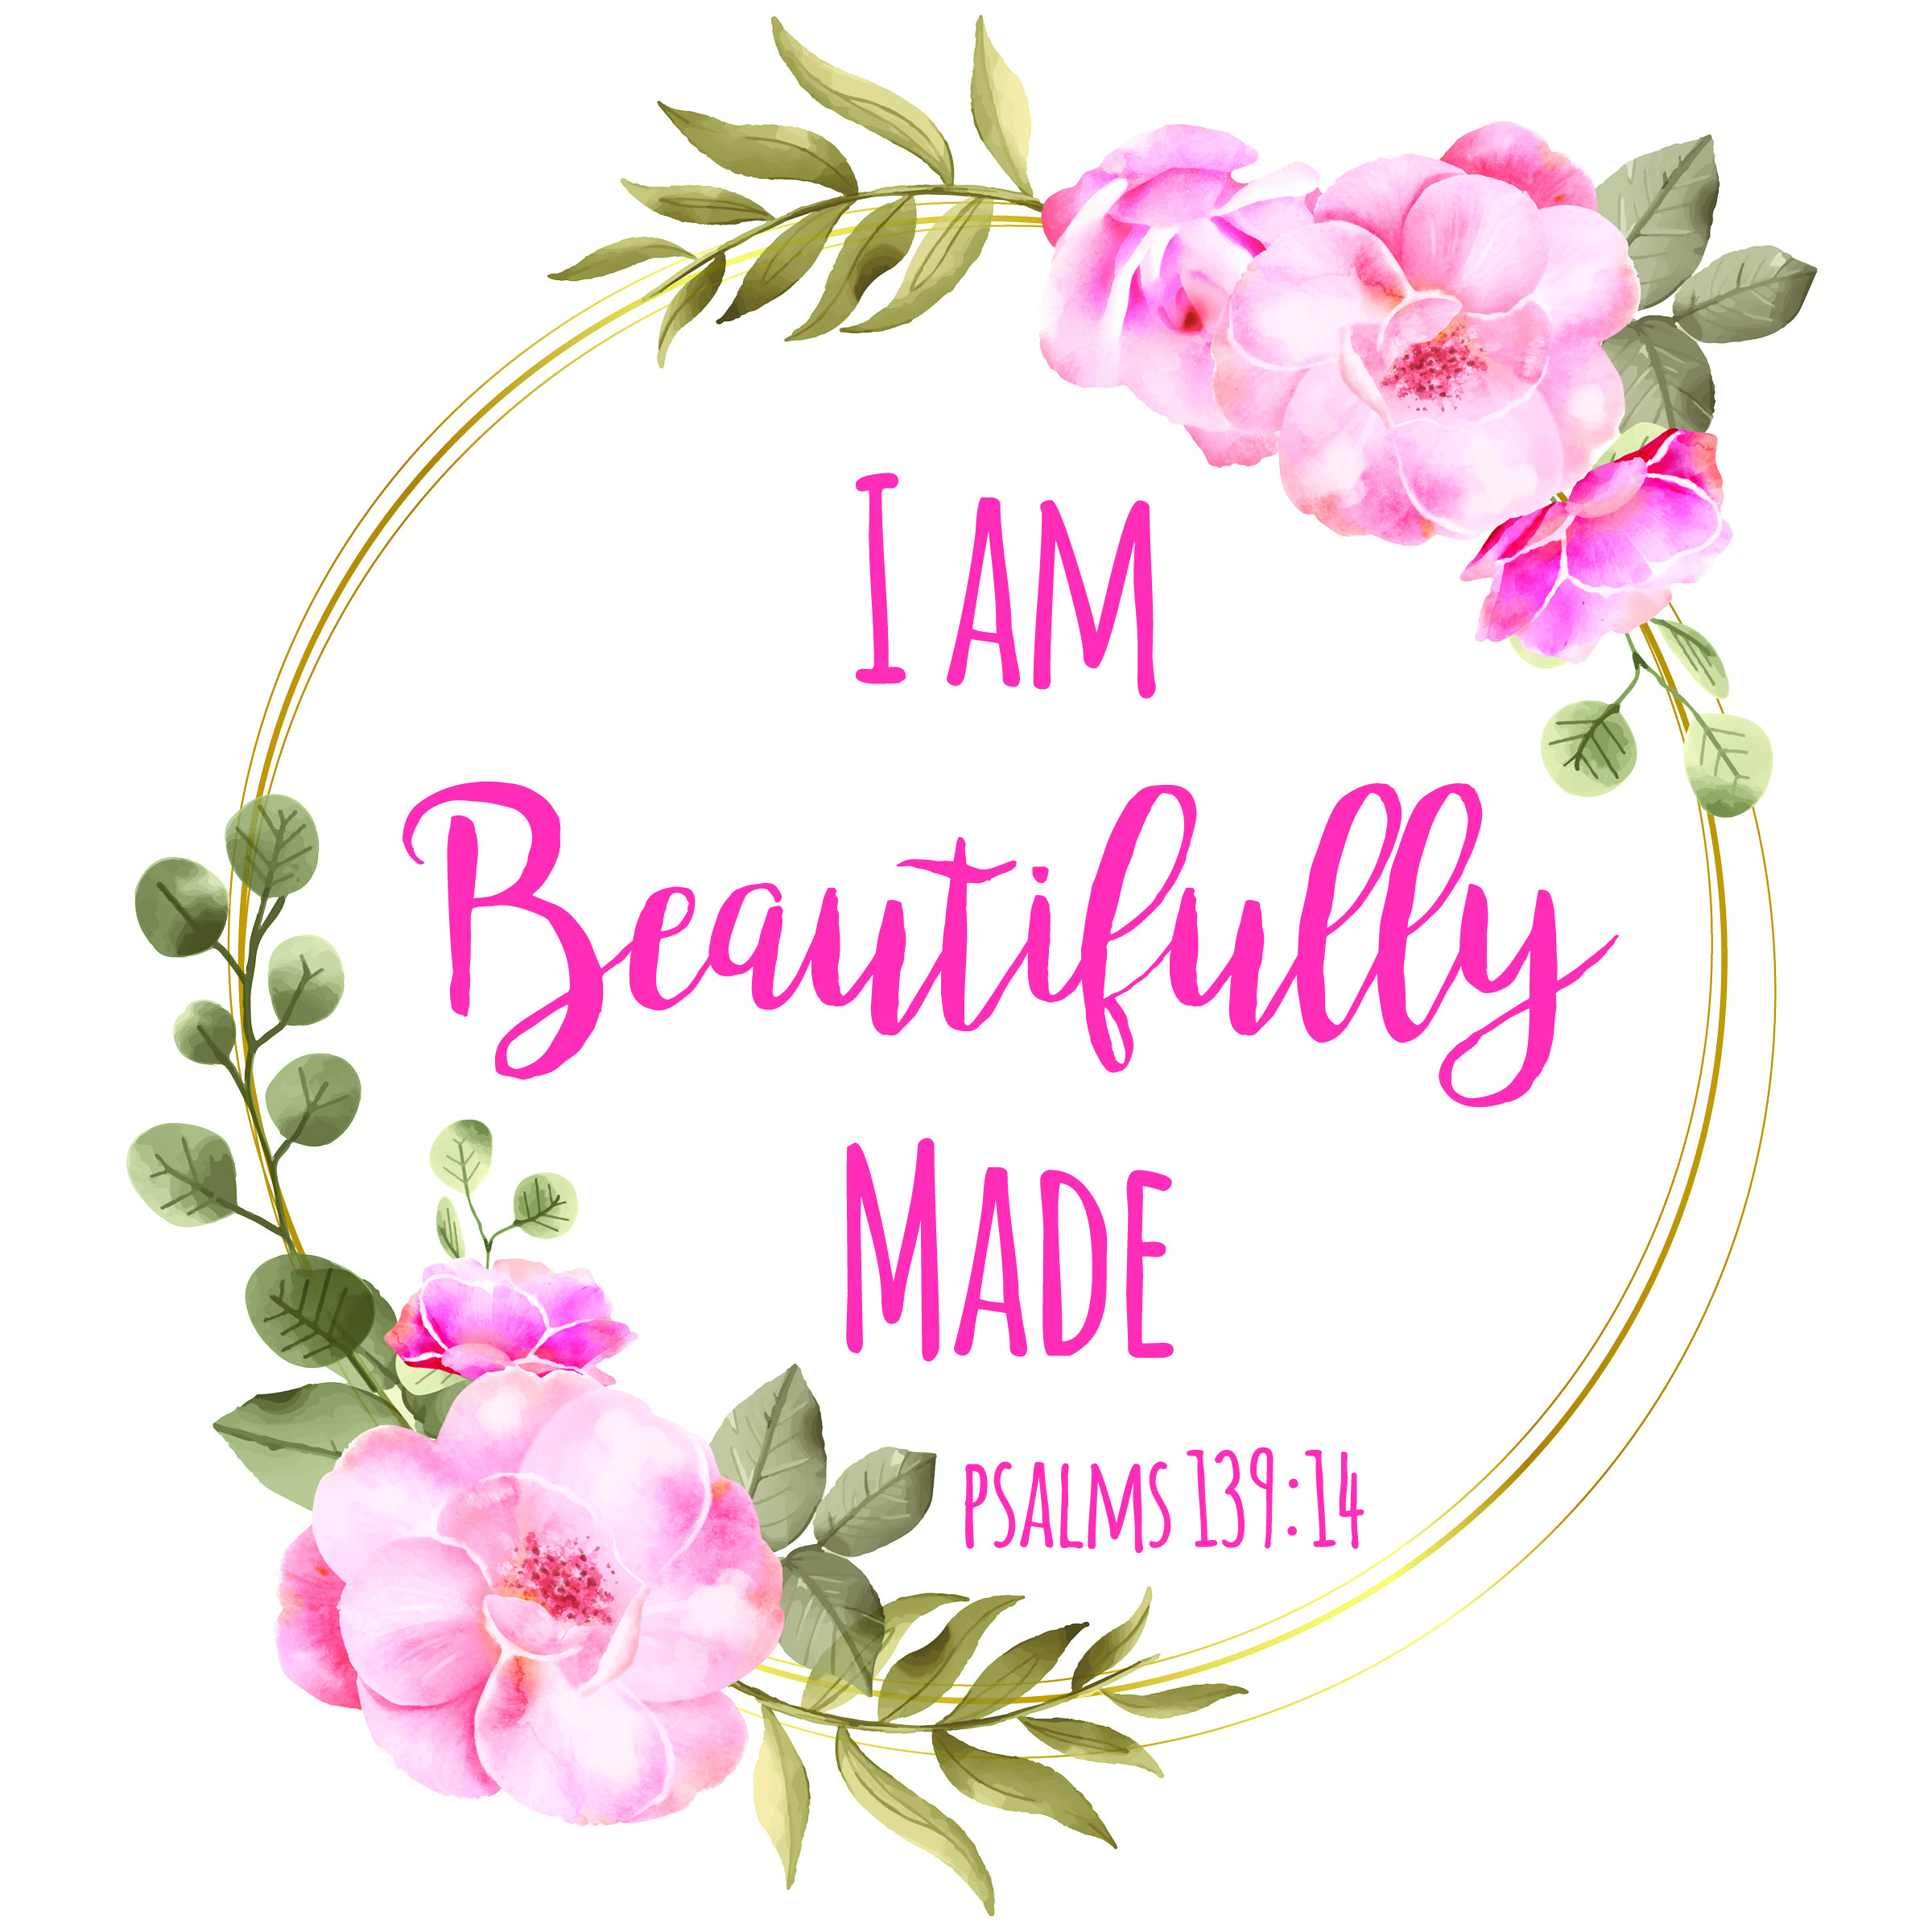 I Am Beautifully Made ~ Psalms 139:14